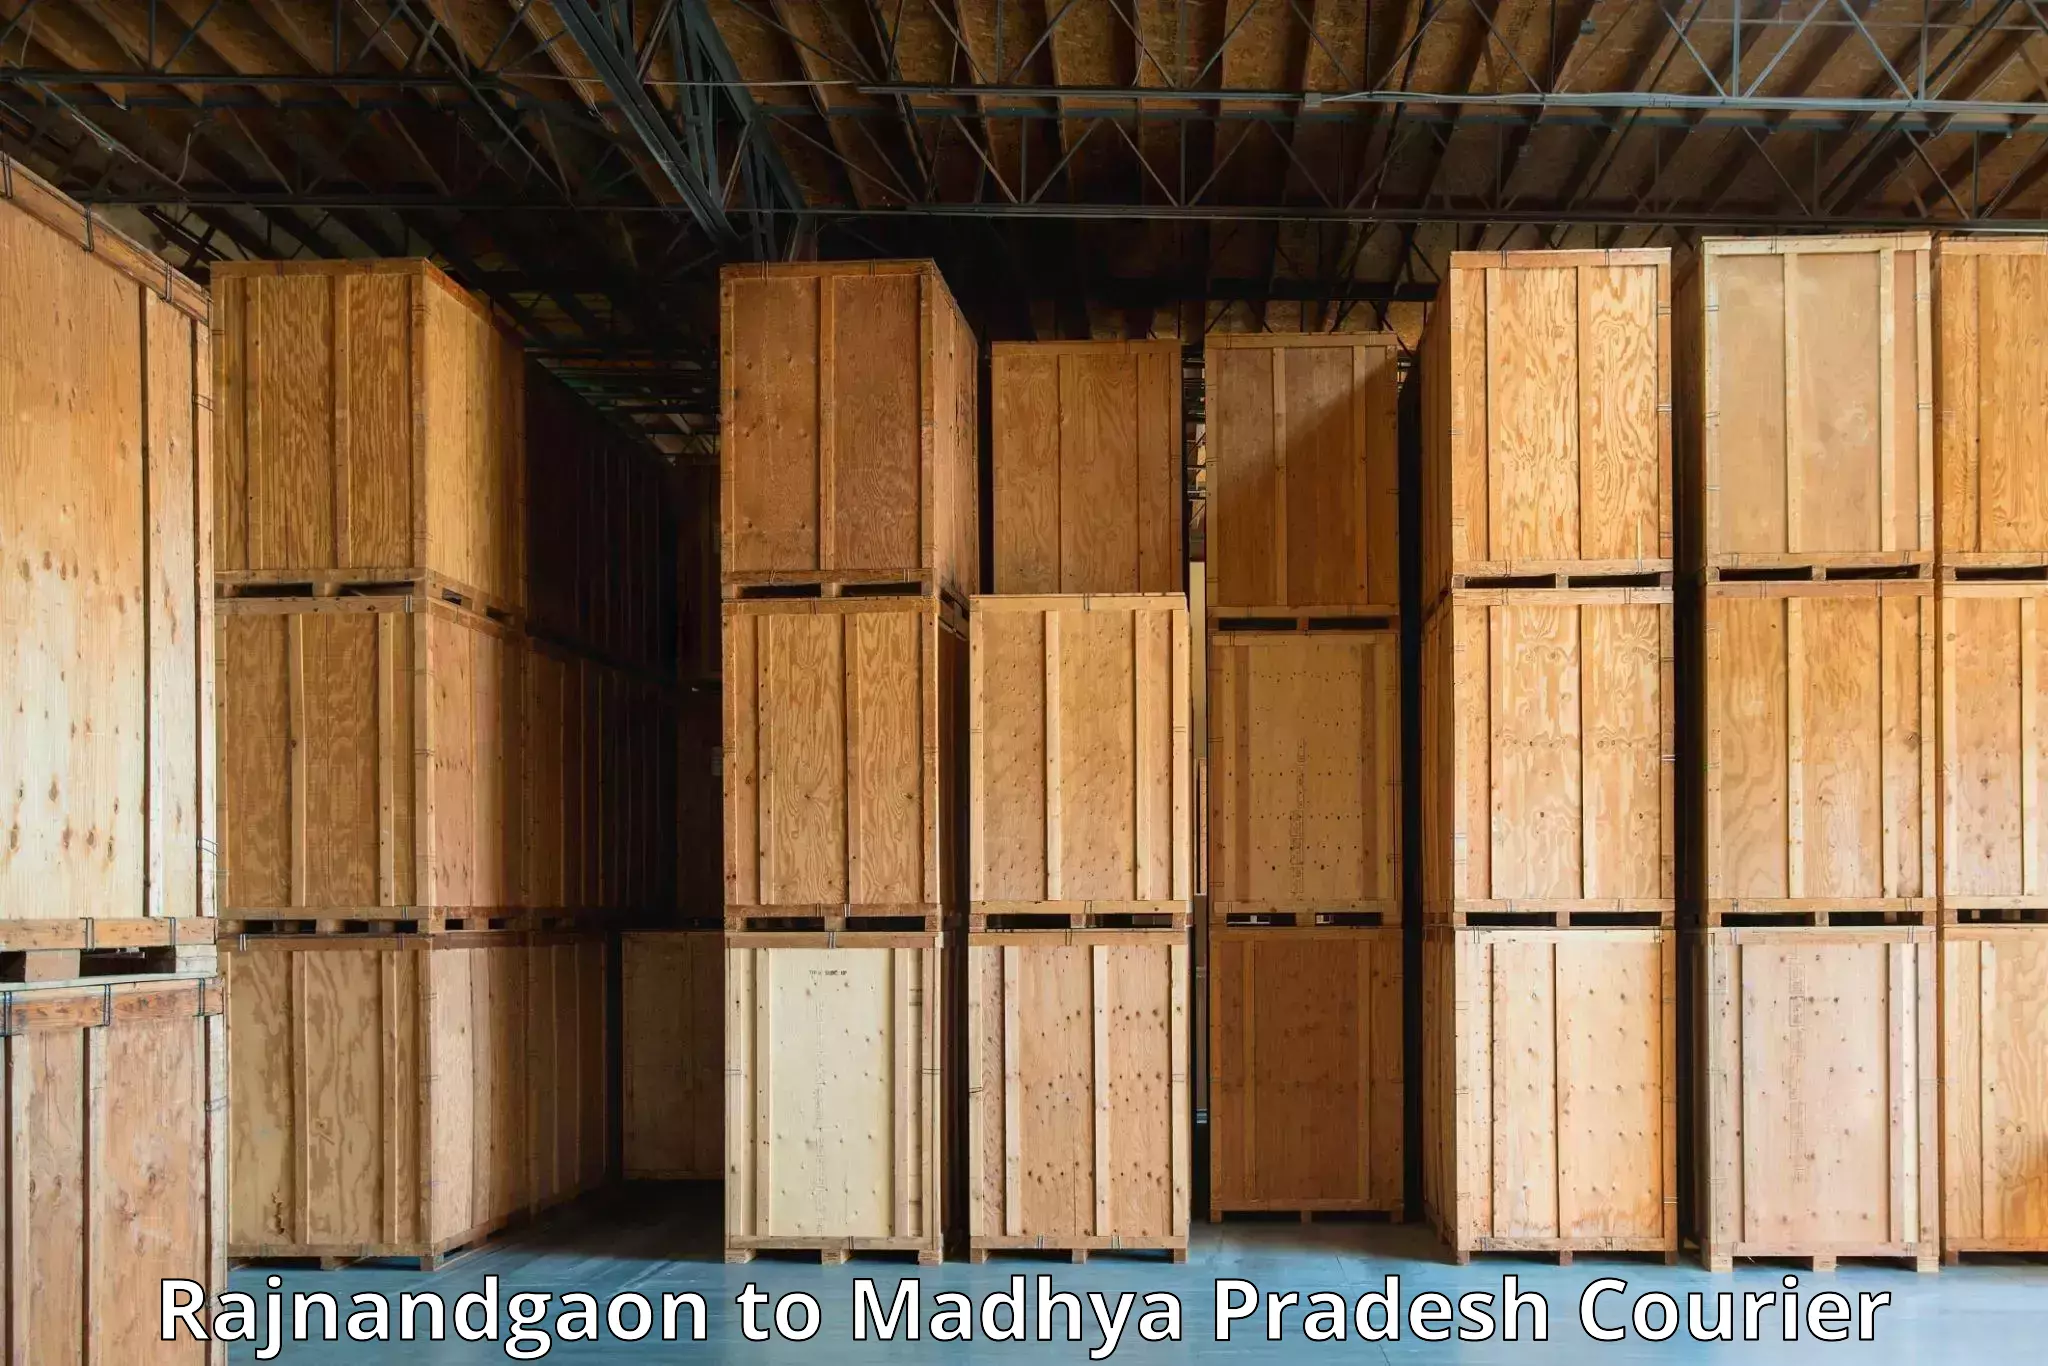 Supply chain efficiency Rajnandgaon to Ujjain